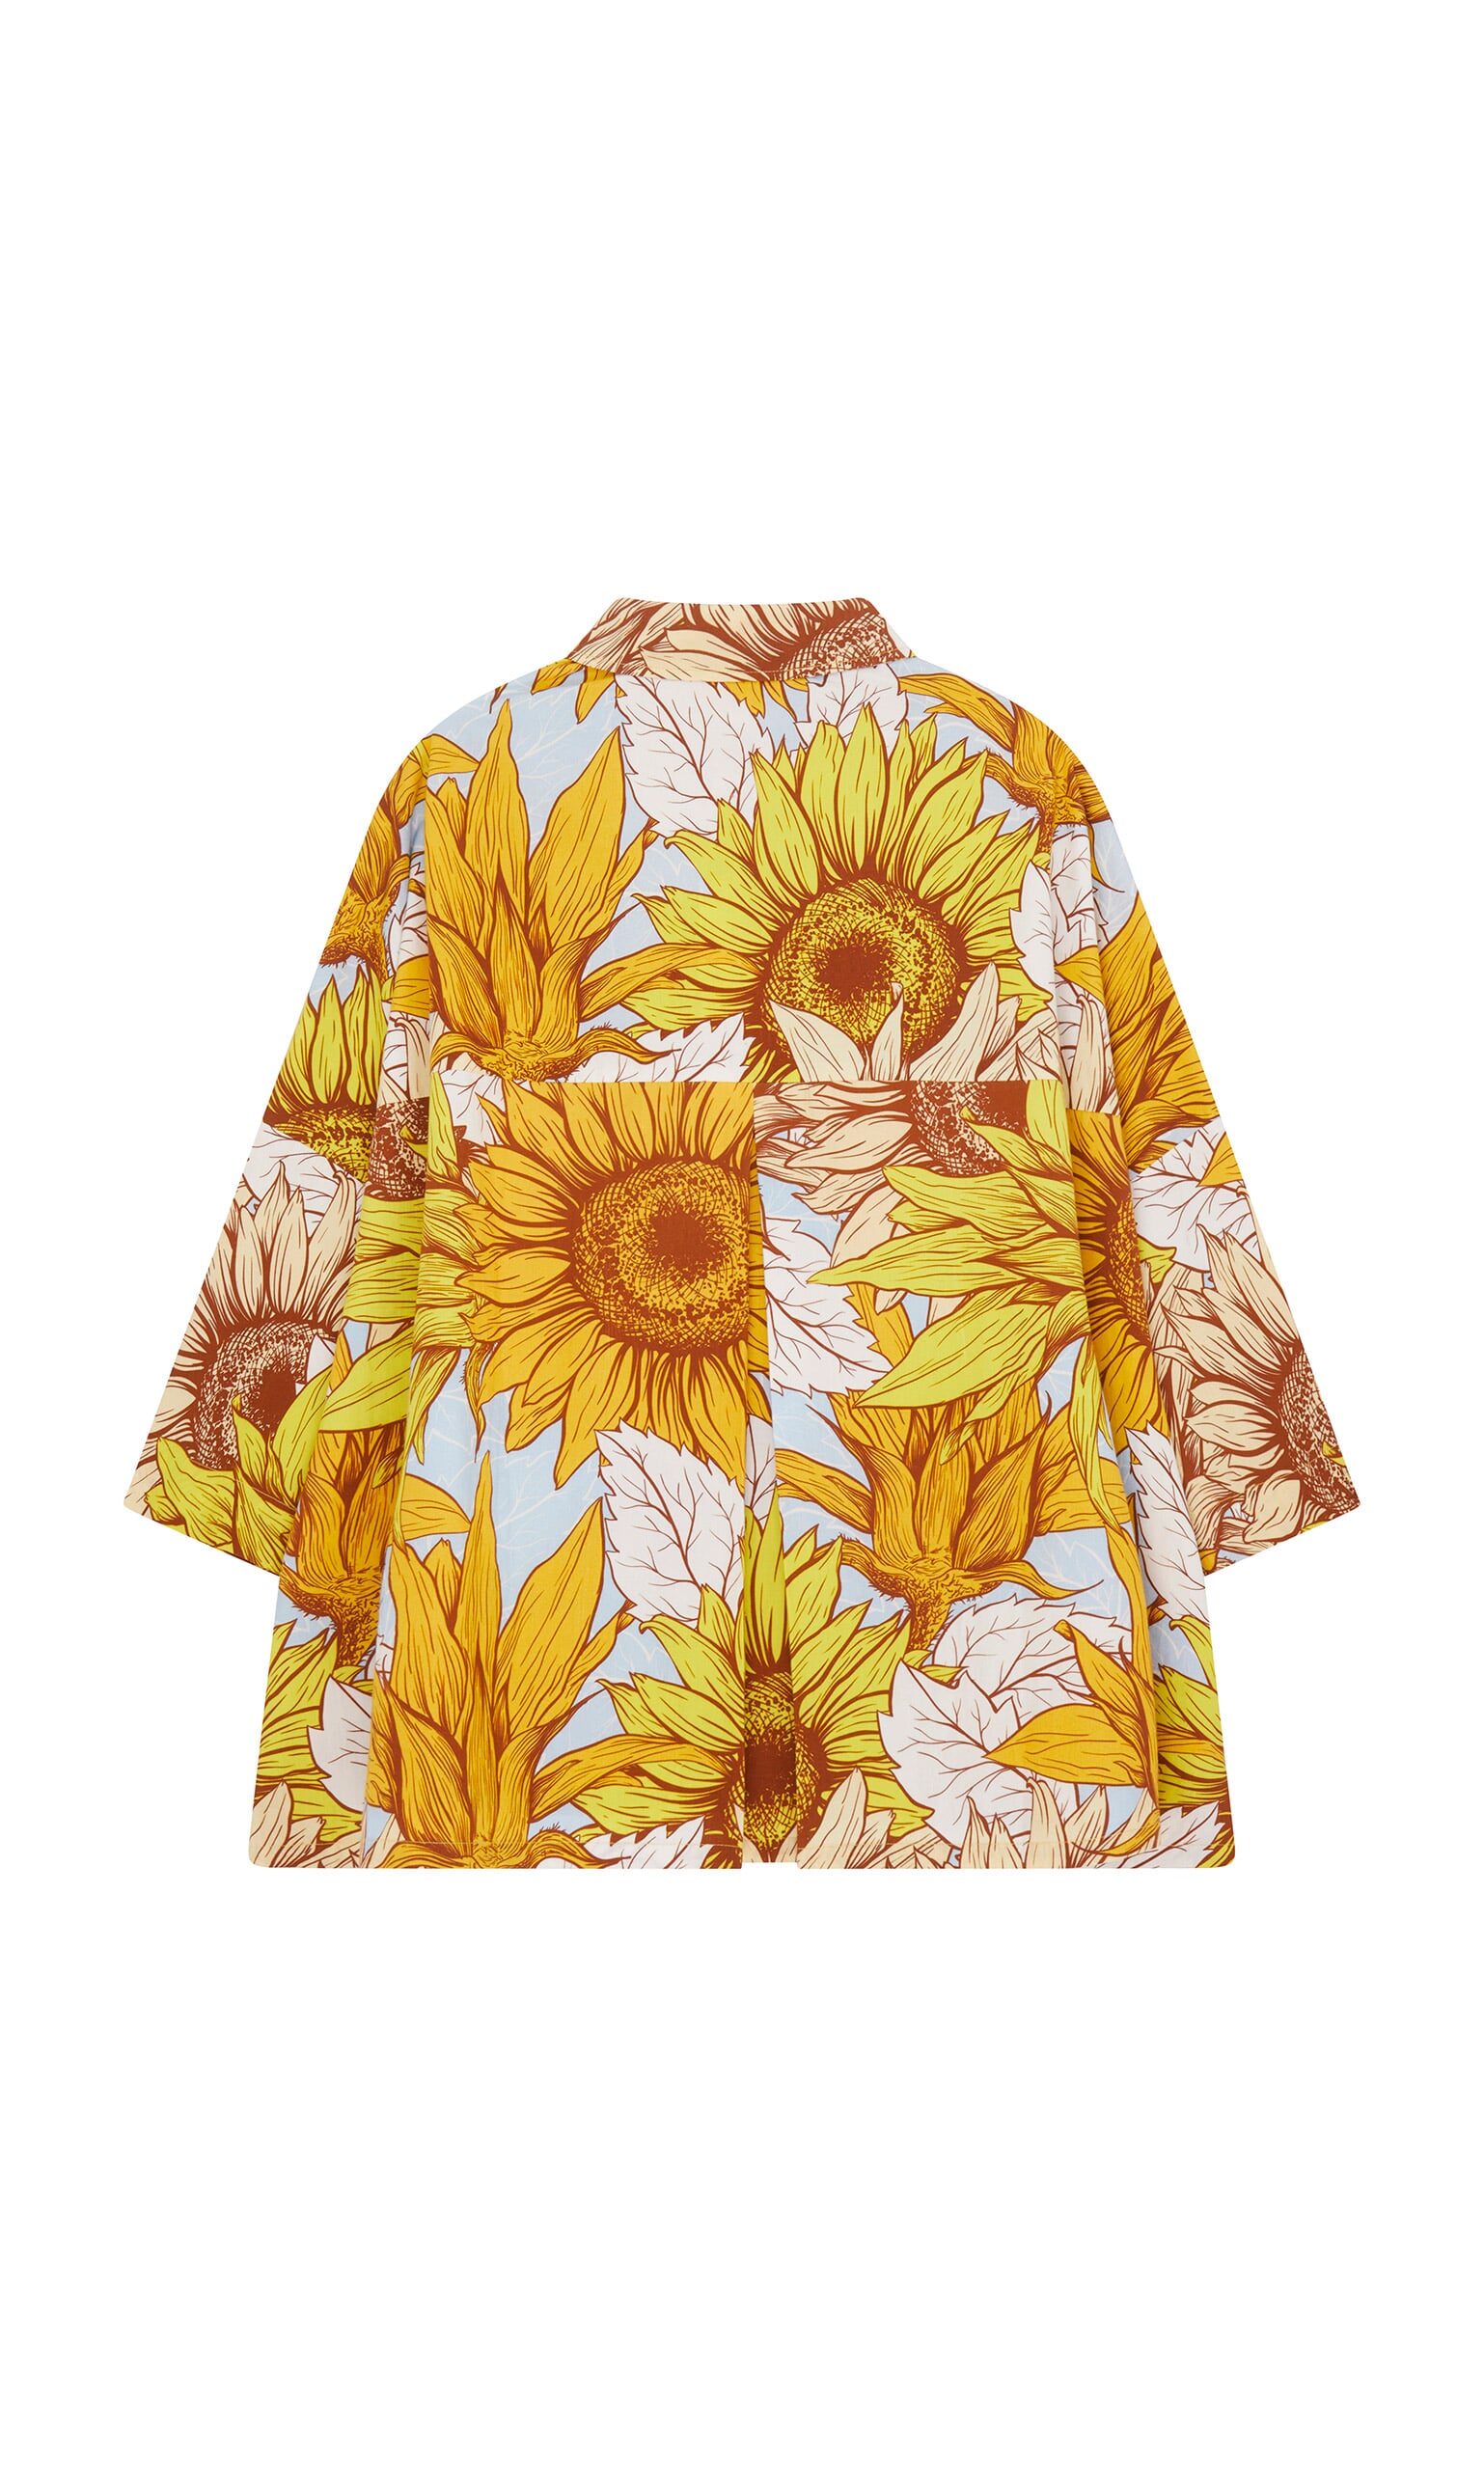 Sunflower shirt - Plümo Ltd